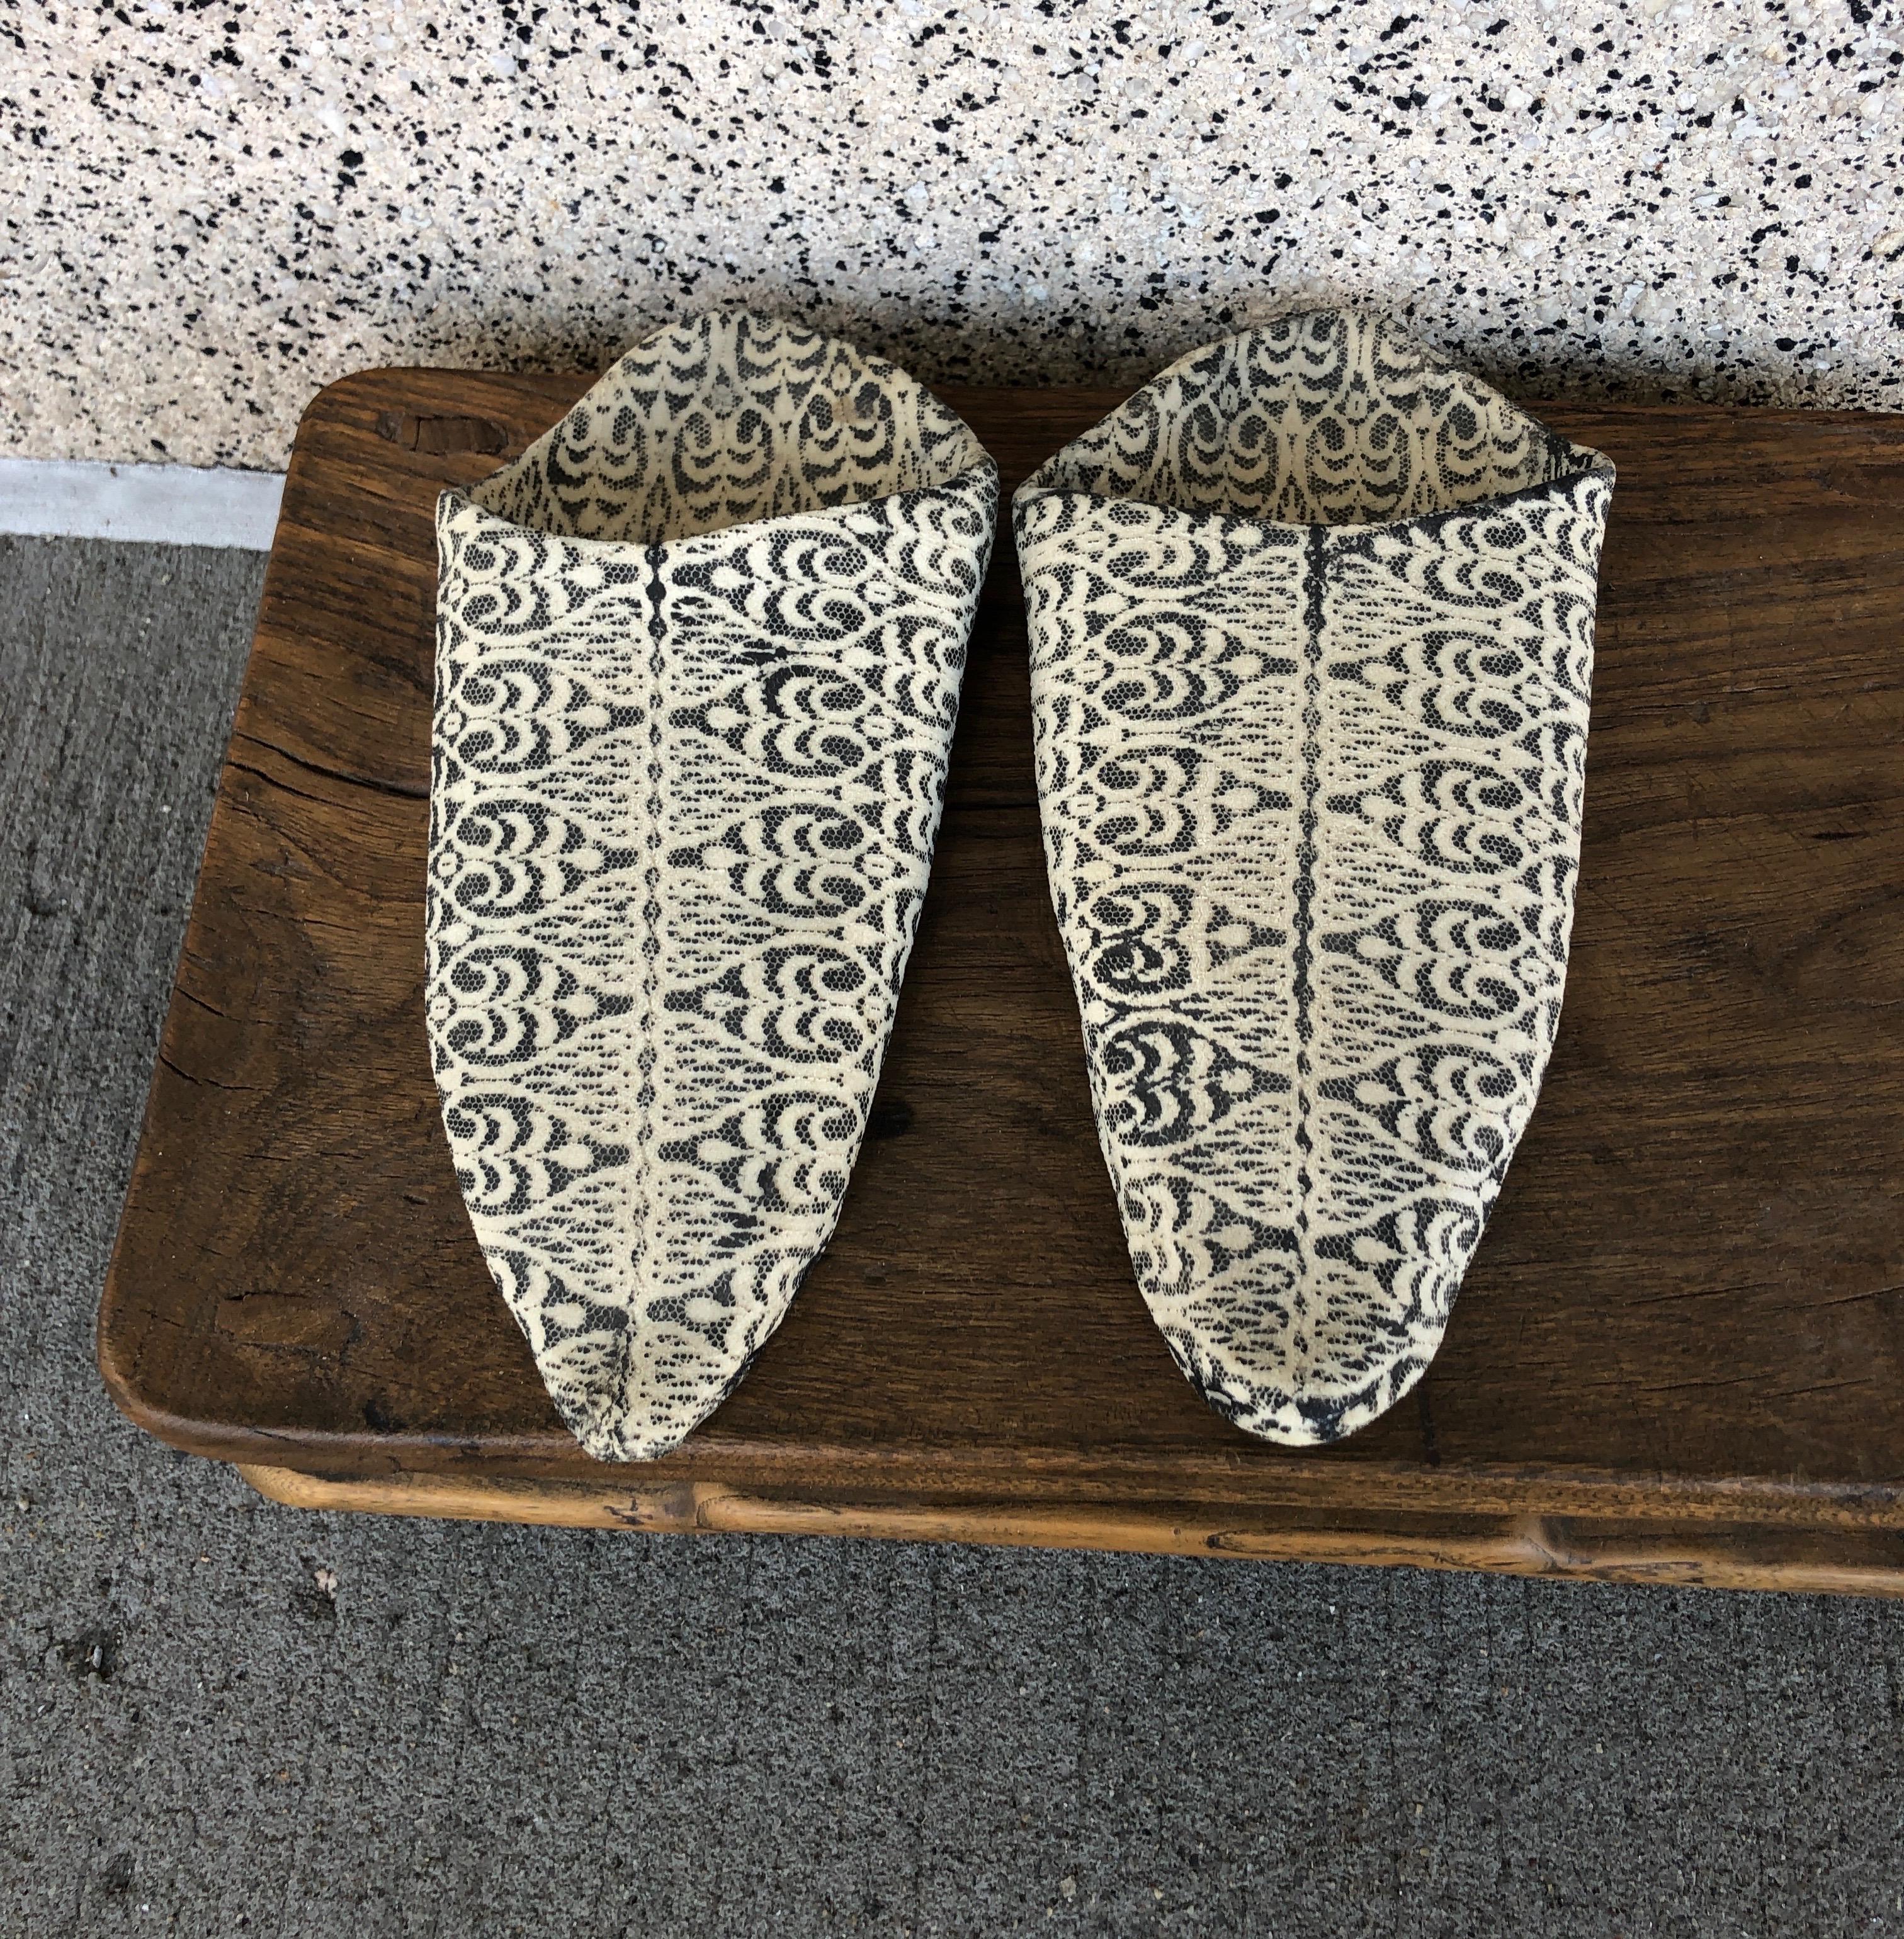 Handmade Contemporary Ceramic Slippers 1